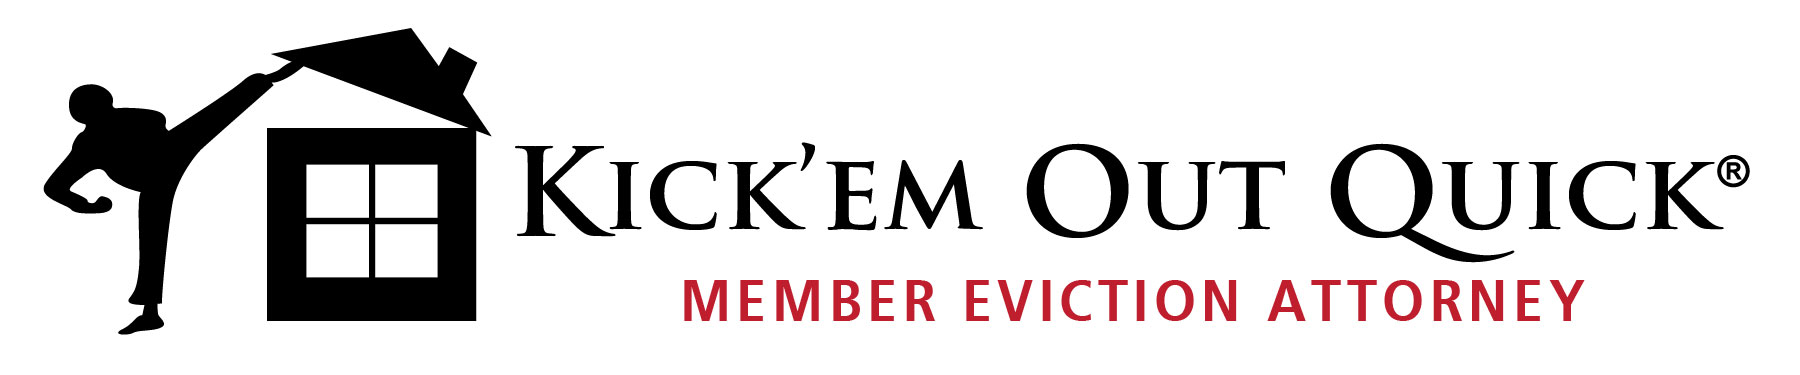 Kick Em Out Quick Member Eviction Attorney Logo 2